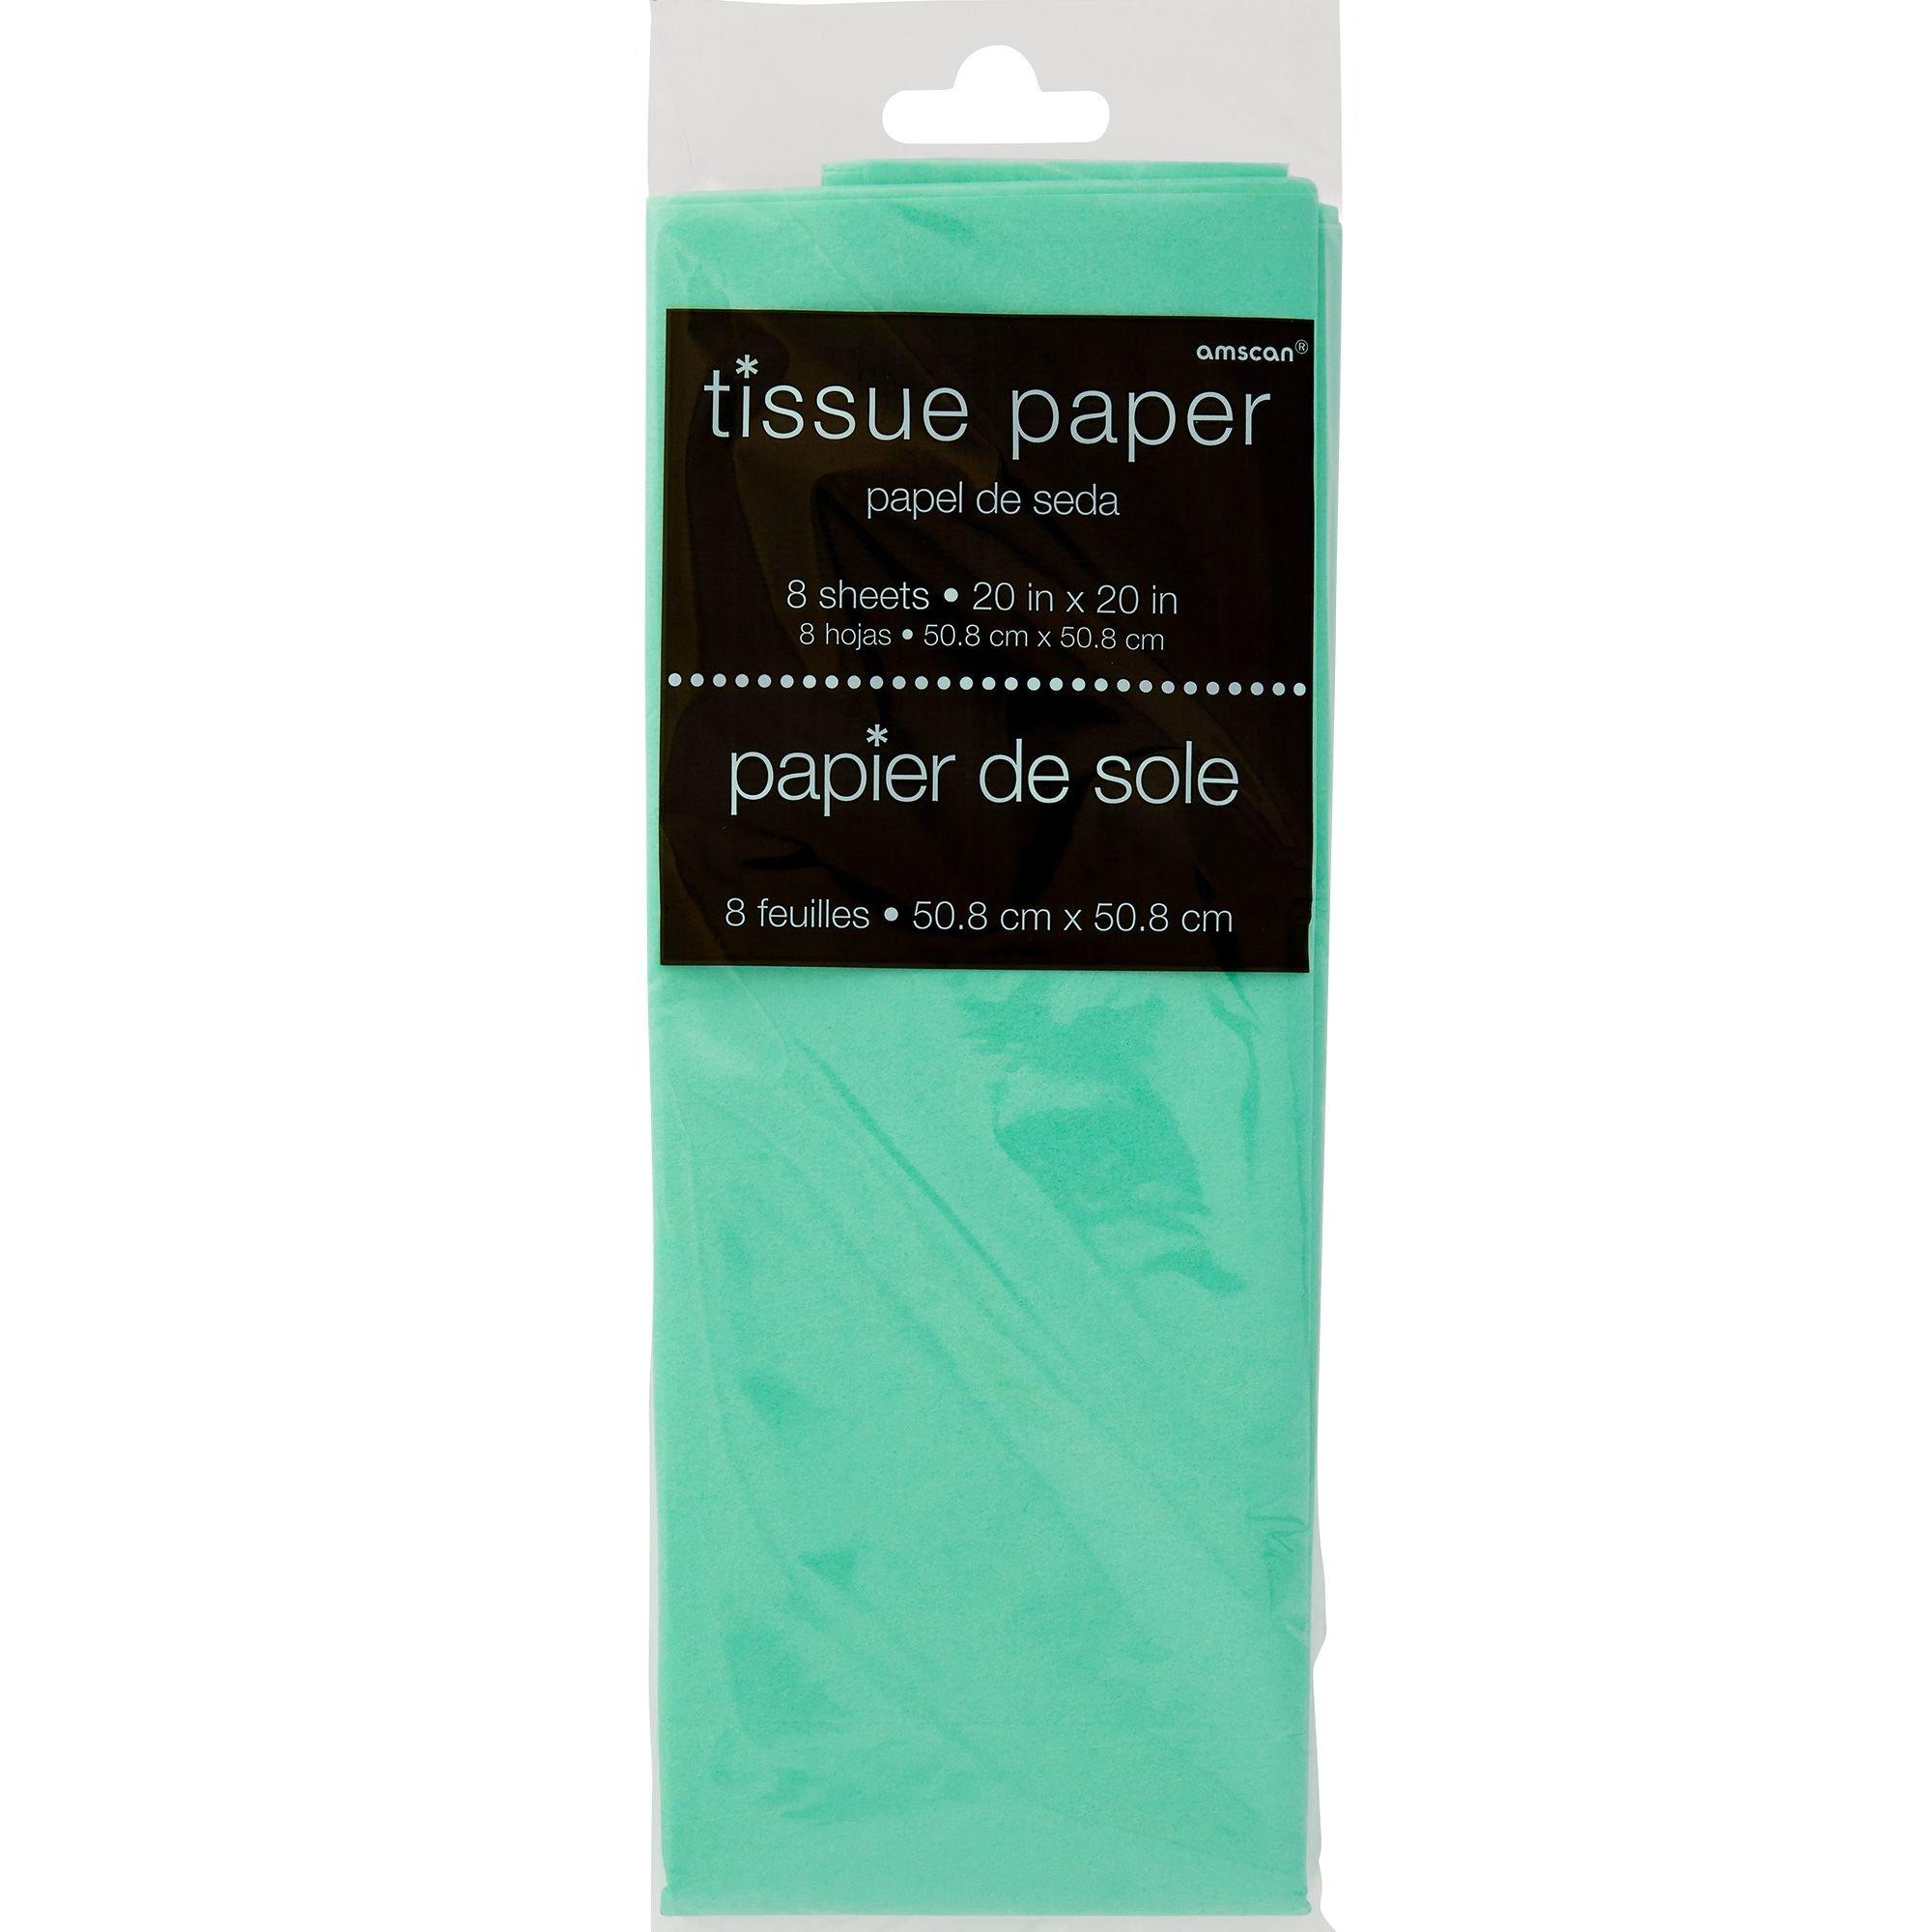 Mint Green Tissue Paper 24 Sheets Bulk Tissue Paper Pale Green Cool Mint  Tissue Paper Pastel Green Seafoam Green Tissue Paper 